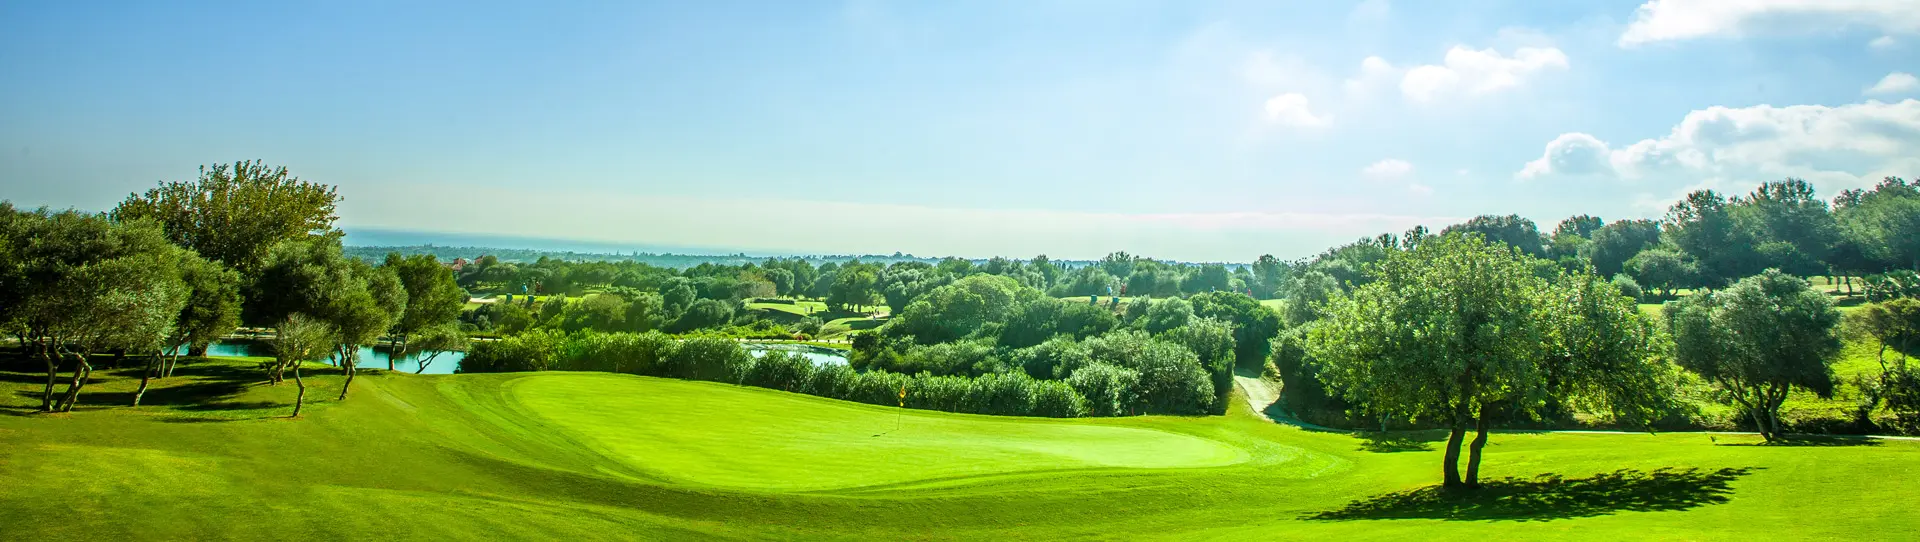 Spain golf courses - La Cañada Golf Club - Photo 1